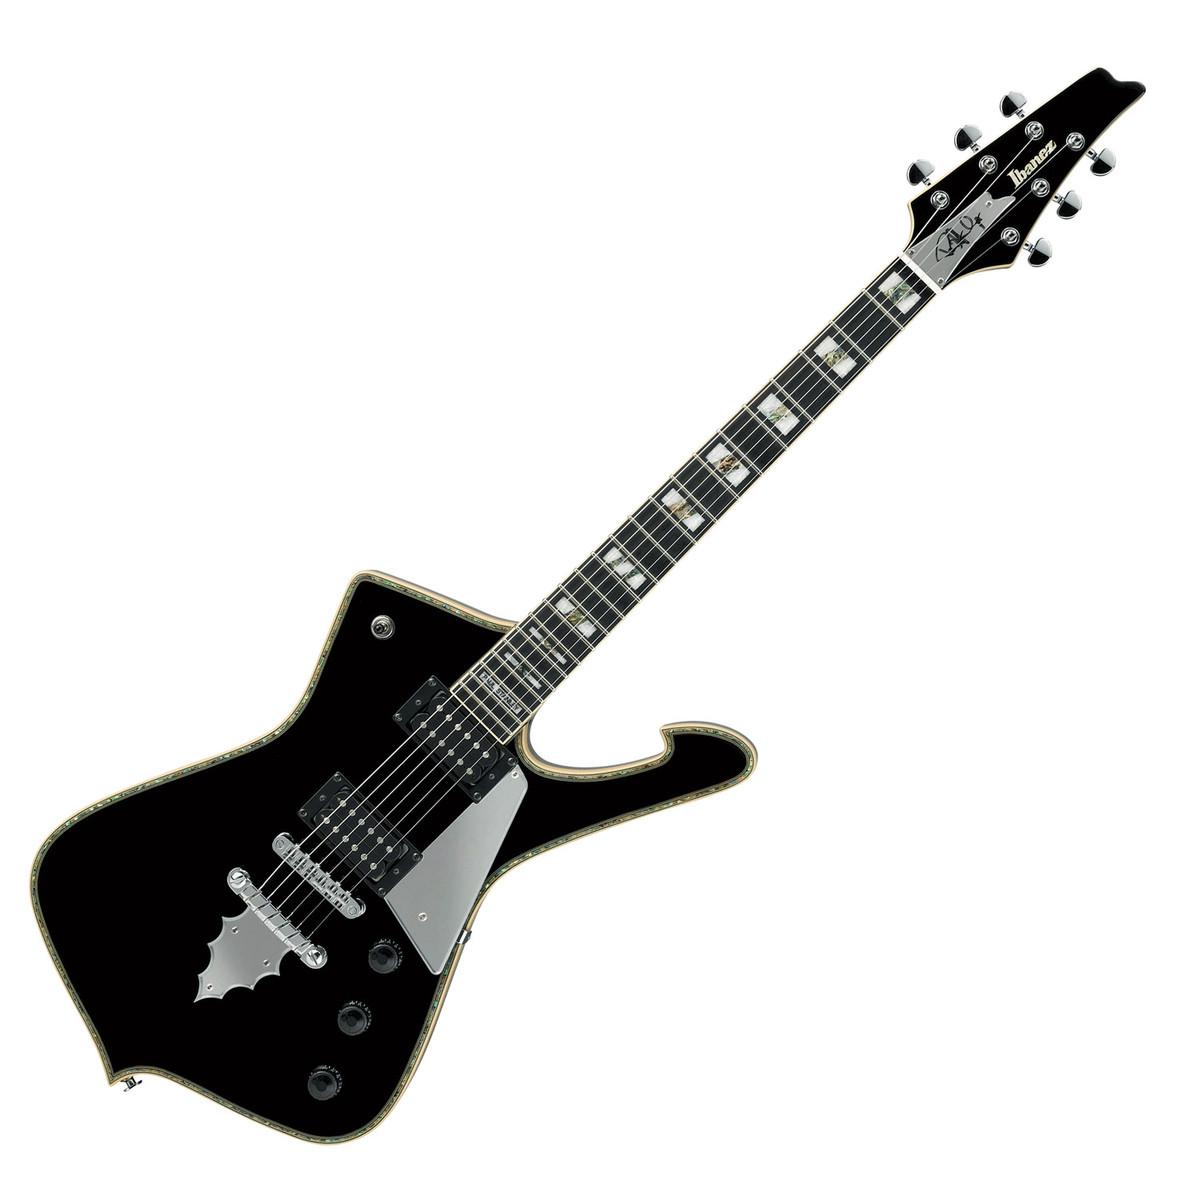 Ibañez - Guitarra Eléctrica Paul Stanley con Funda, Color: Negra Mod.PS120-BK_92